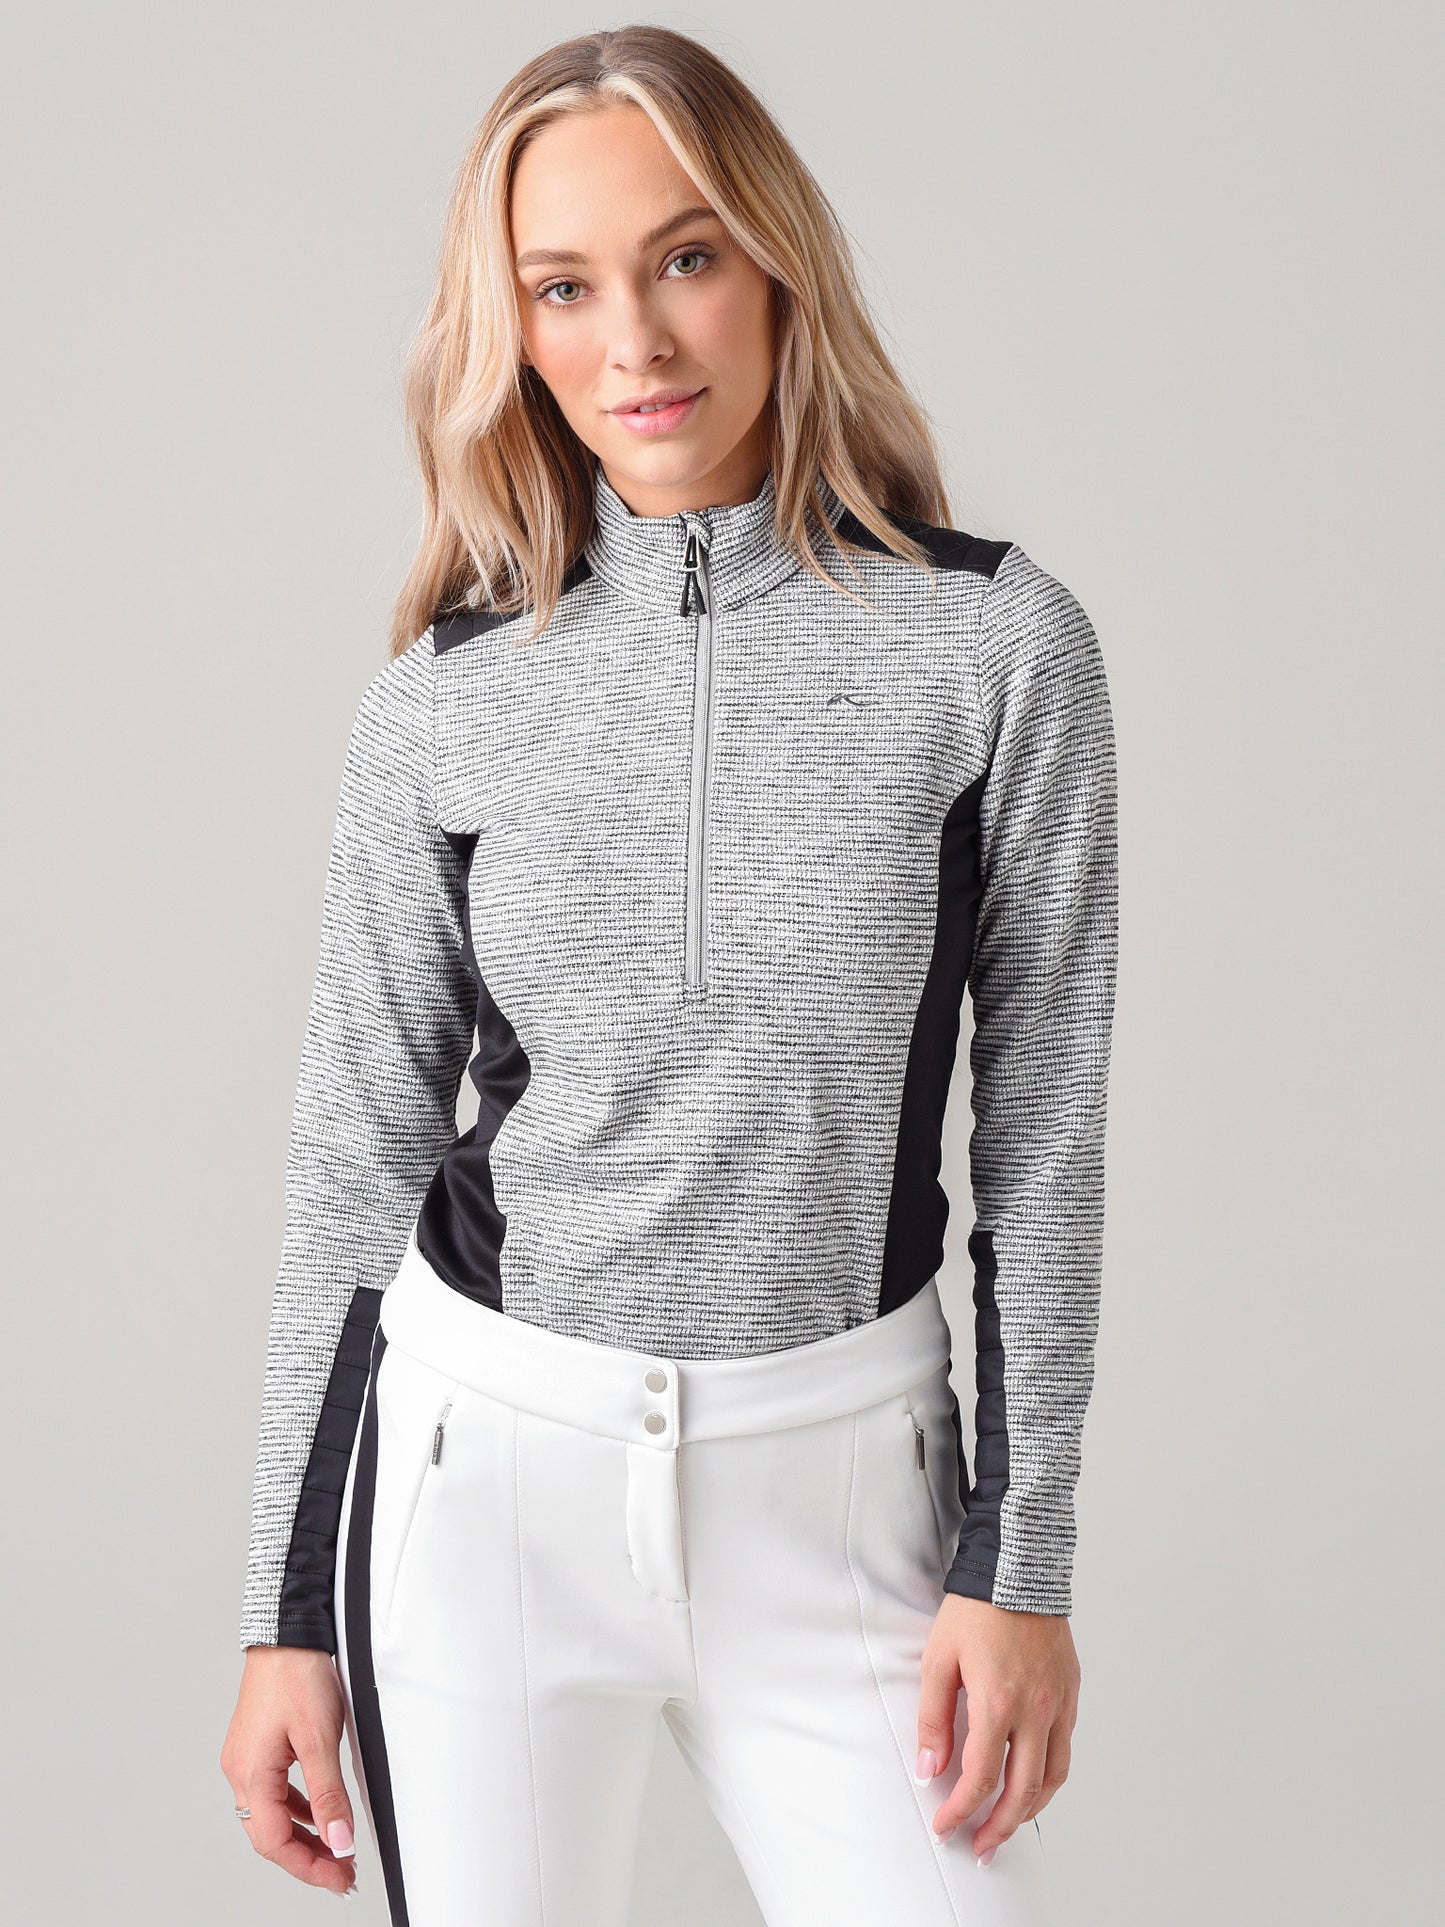 Kjus Women's Forun Half-Zip Sweater